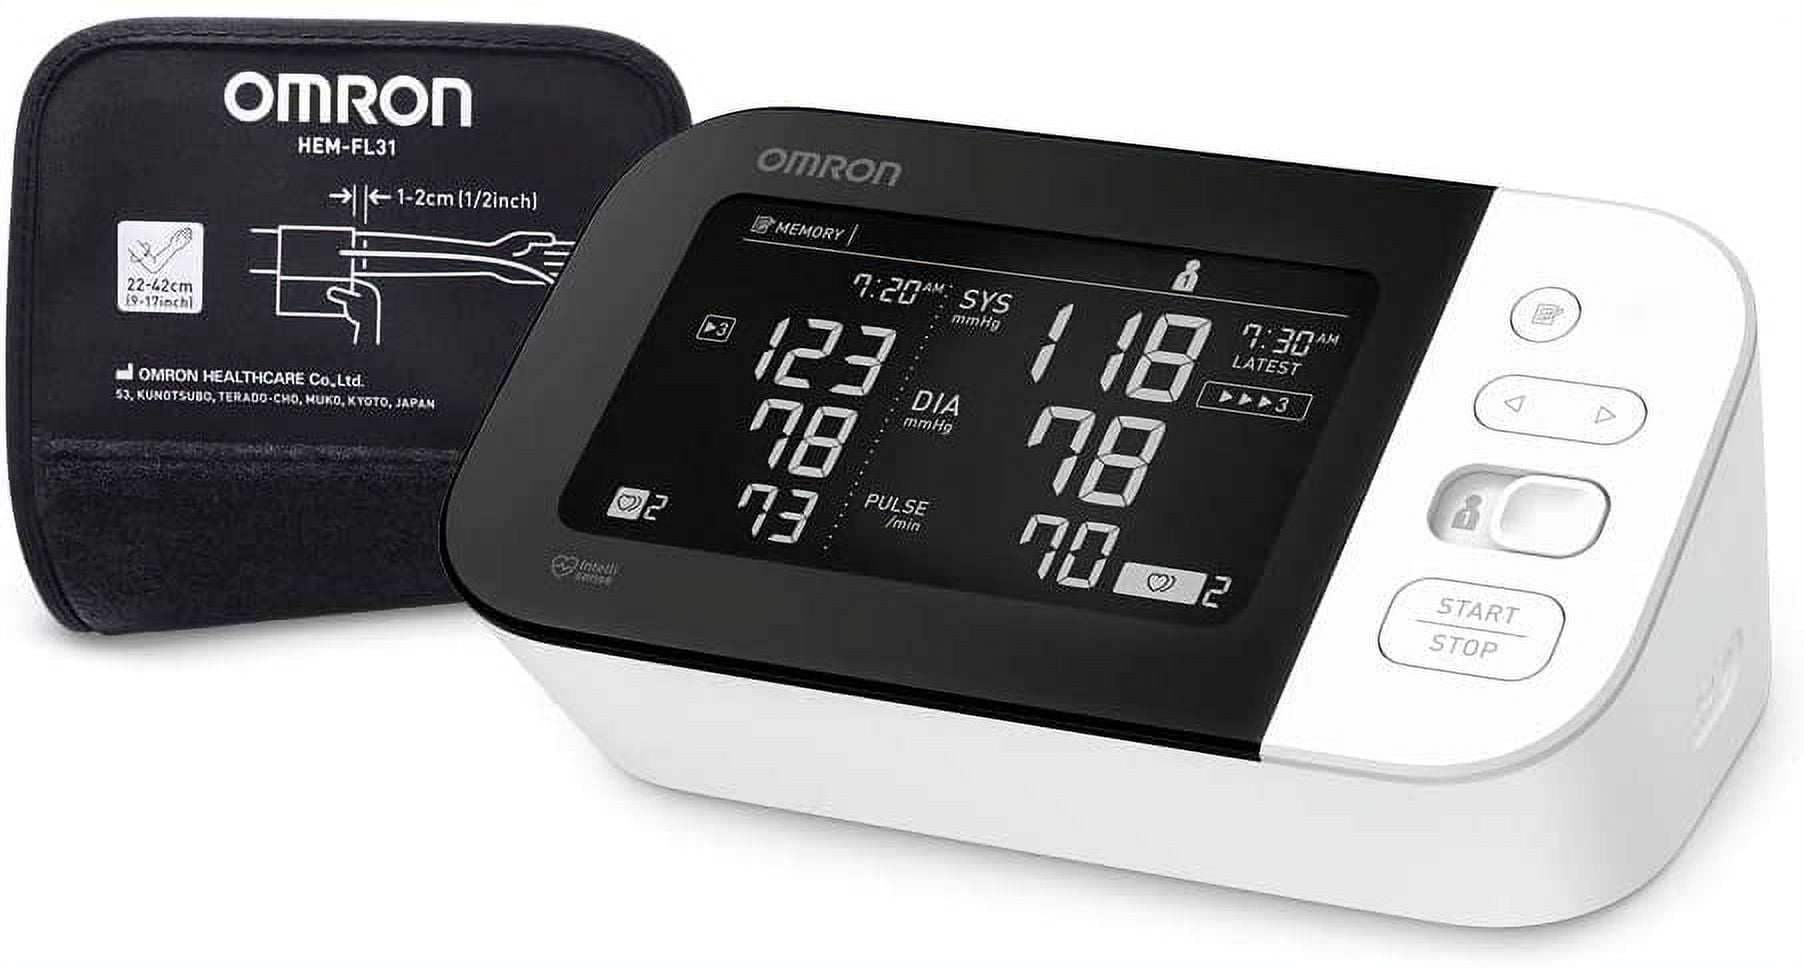 Omron 10 Series Wireless Upper Arm Blood Pressure Monitor BP7450 